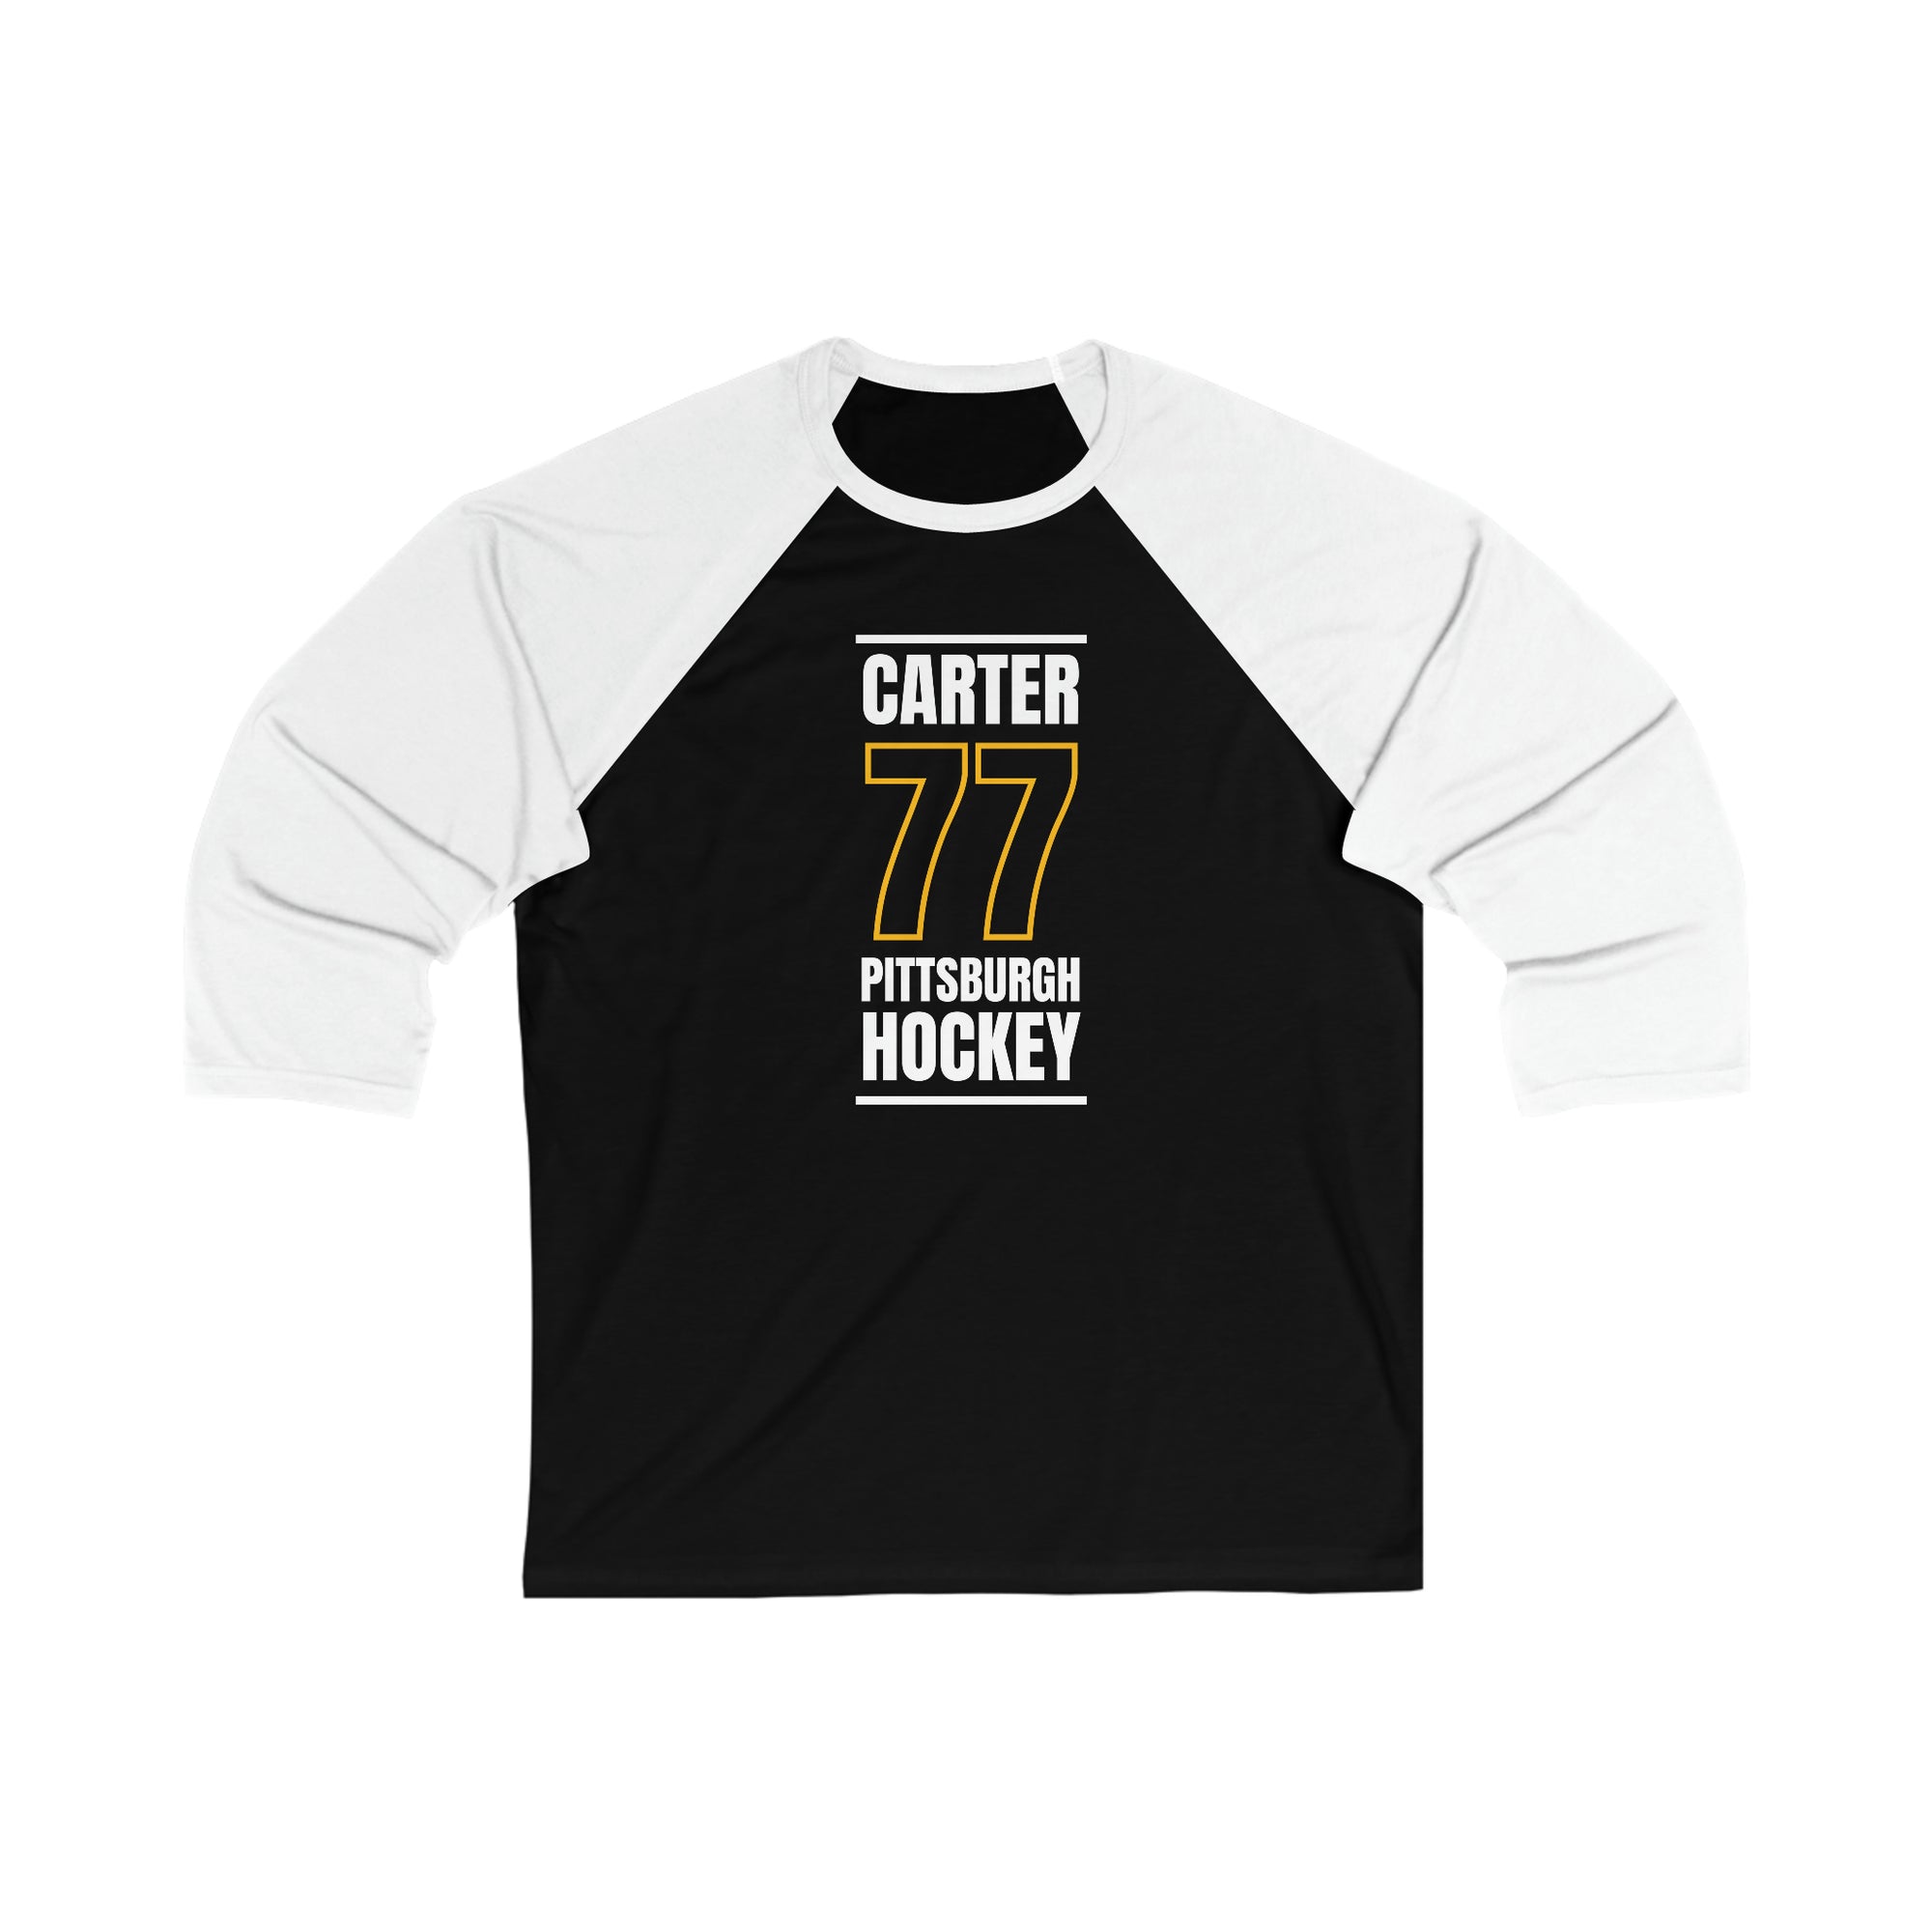 Carter 77 Pittsburgh Hockey Black Vertical Design Unisex Tri-Blend 3/4 Sleeve Raglan Baseball Shirt